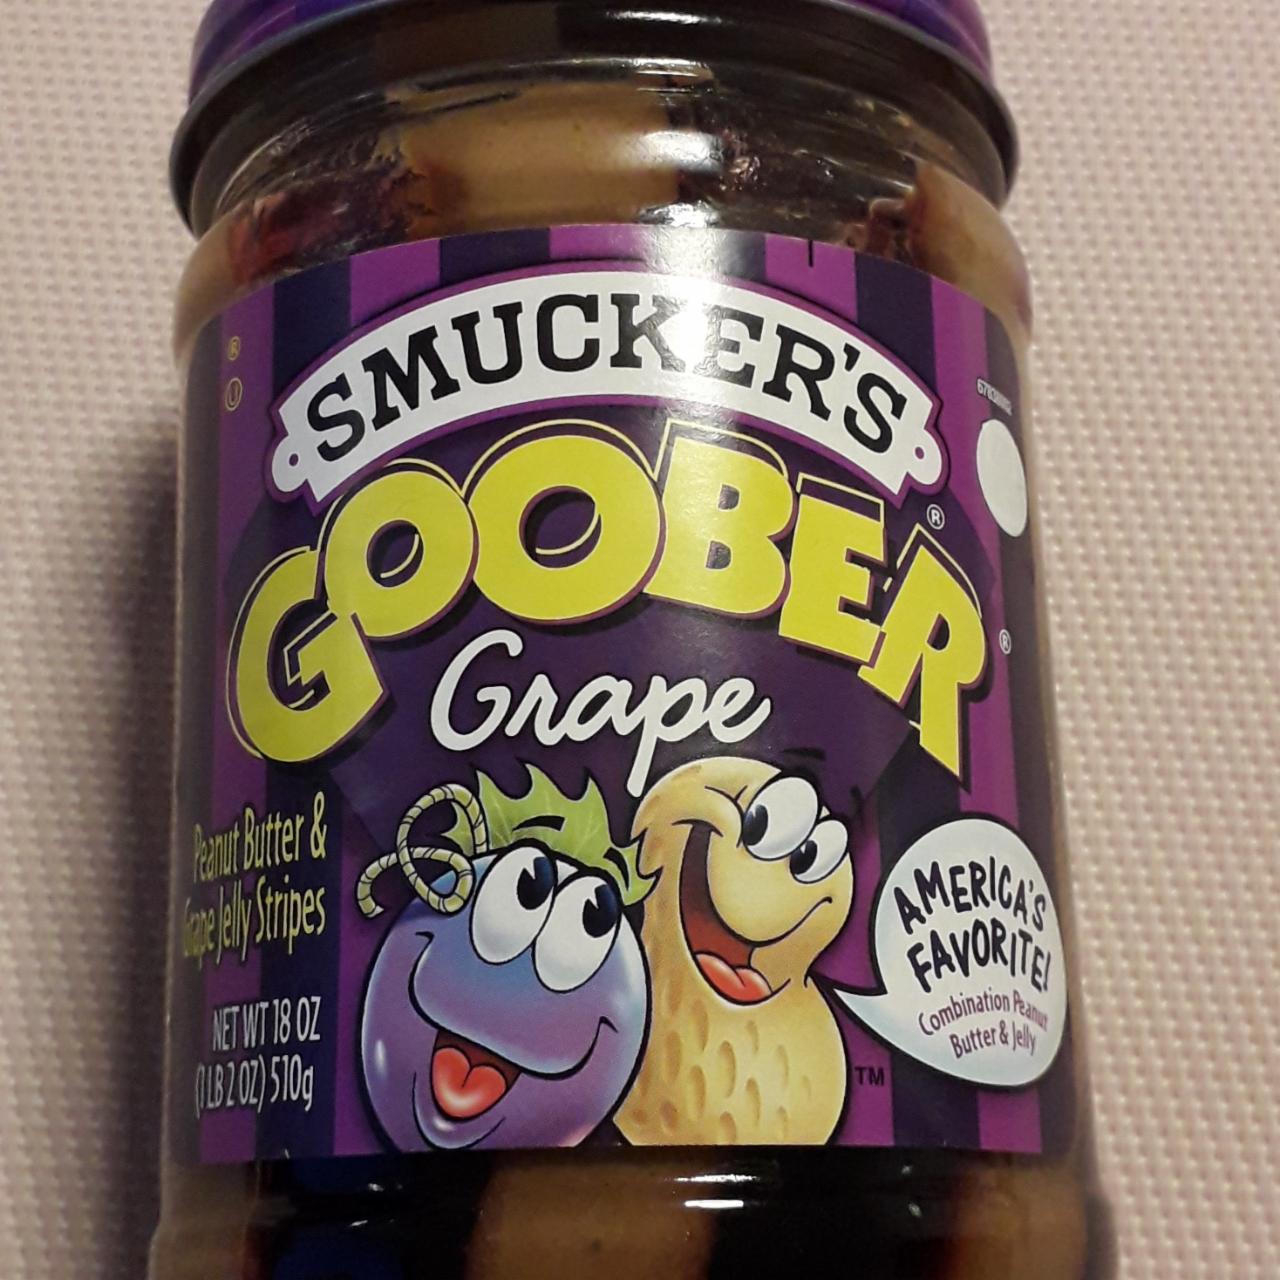 Fotografie - Goober Grape Peanut Butter & Grape jelly stripes Smucker's